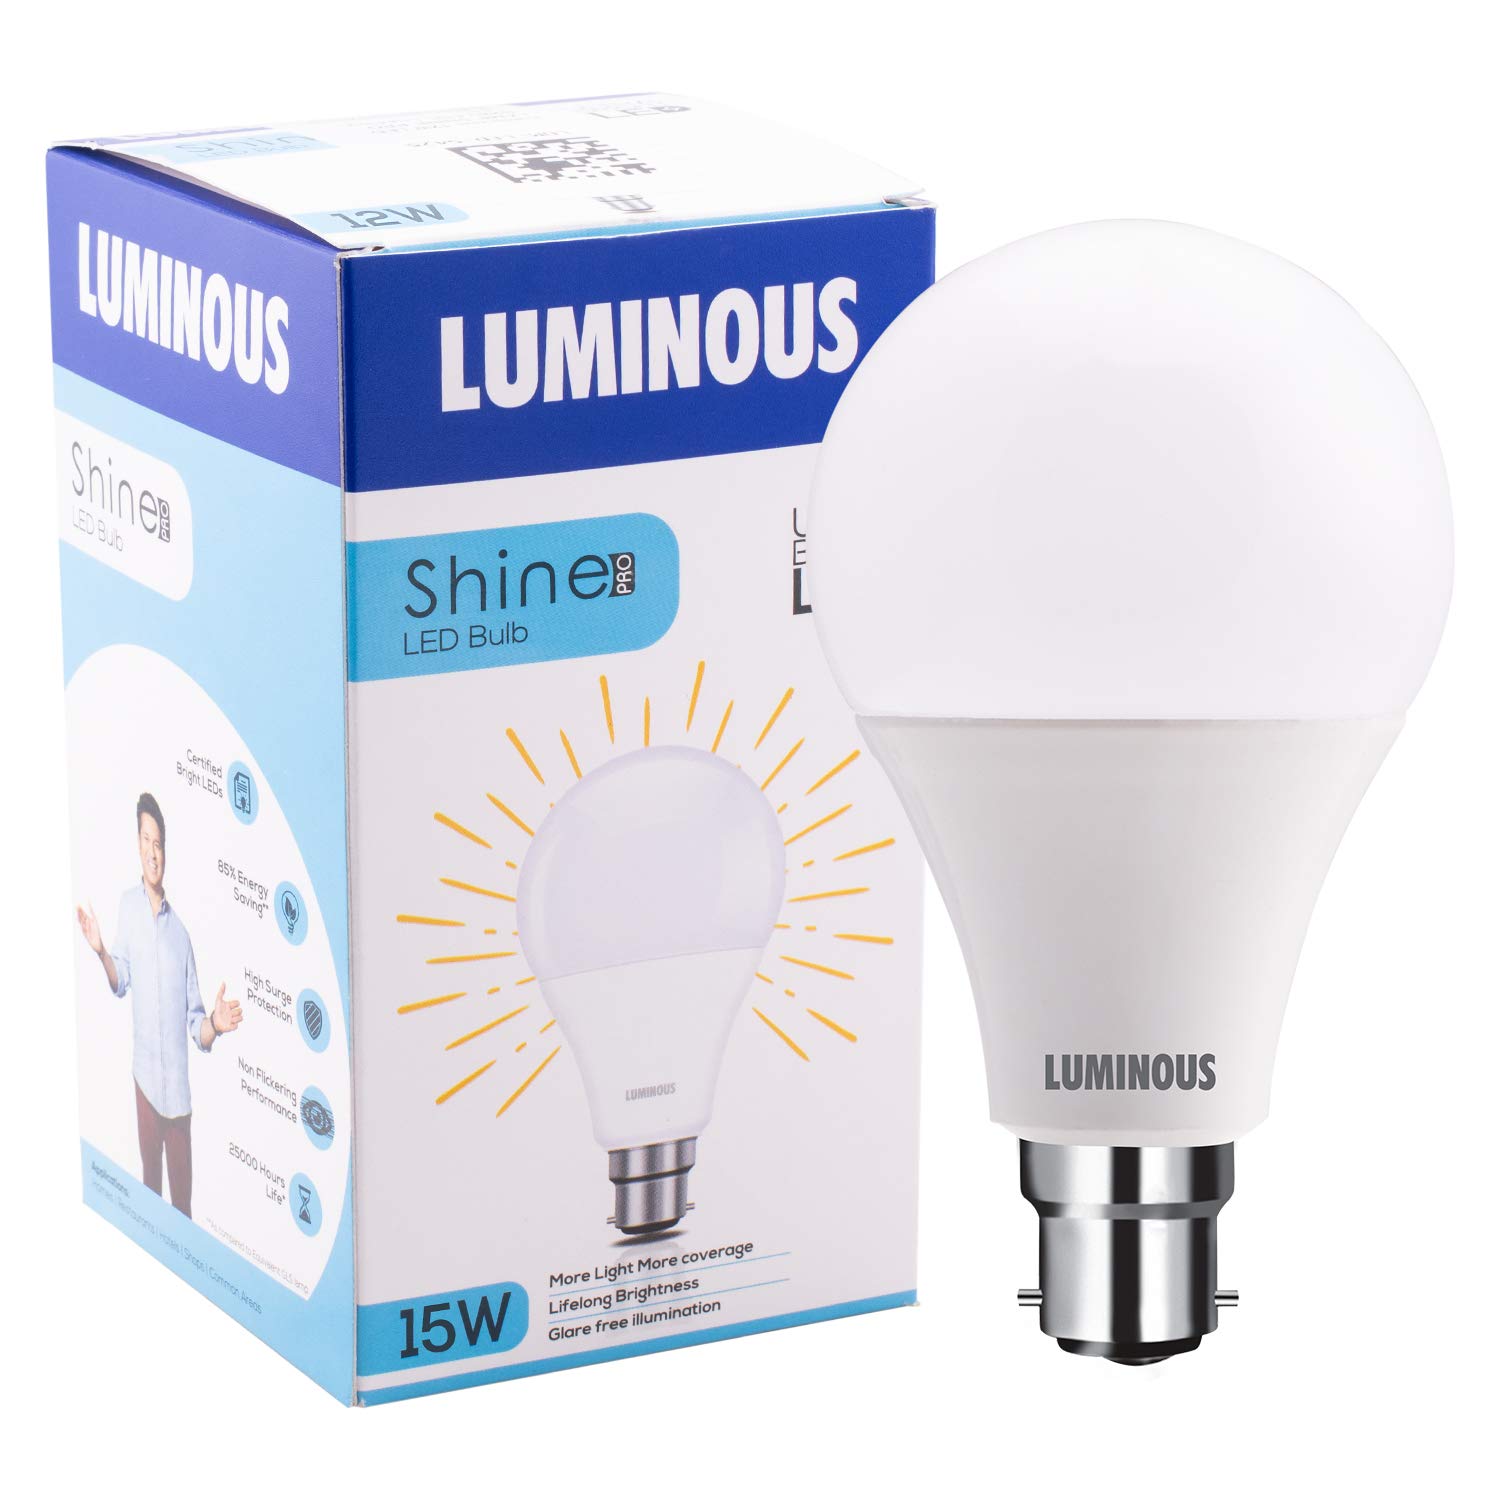 Luminous 15W Led Bulb